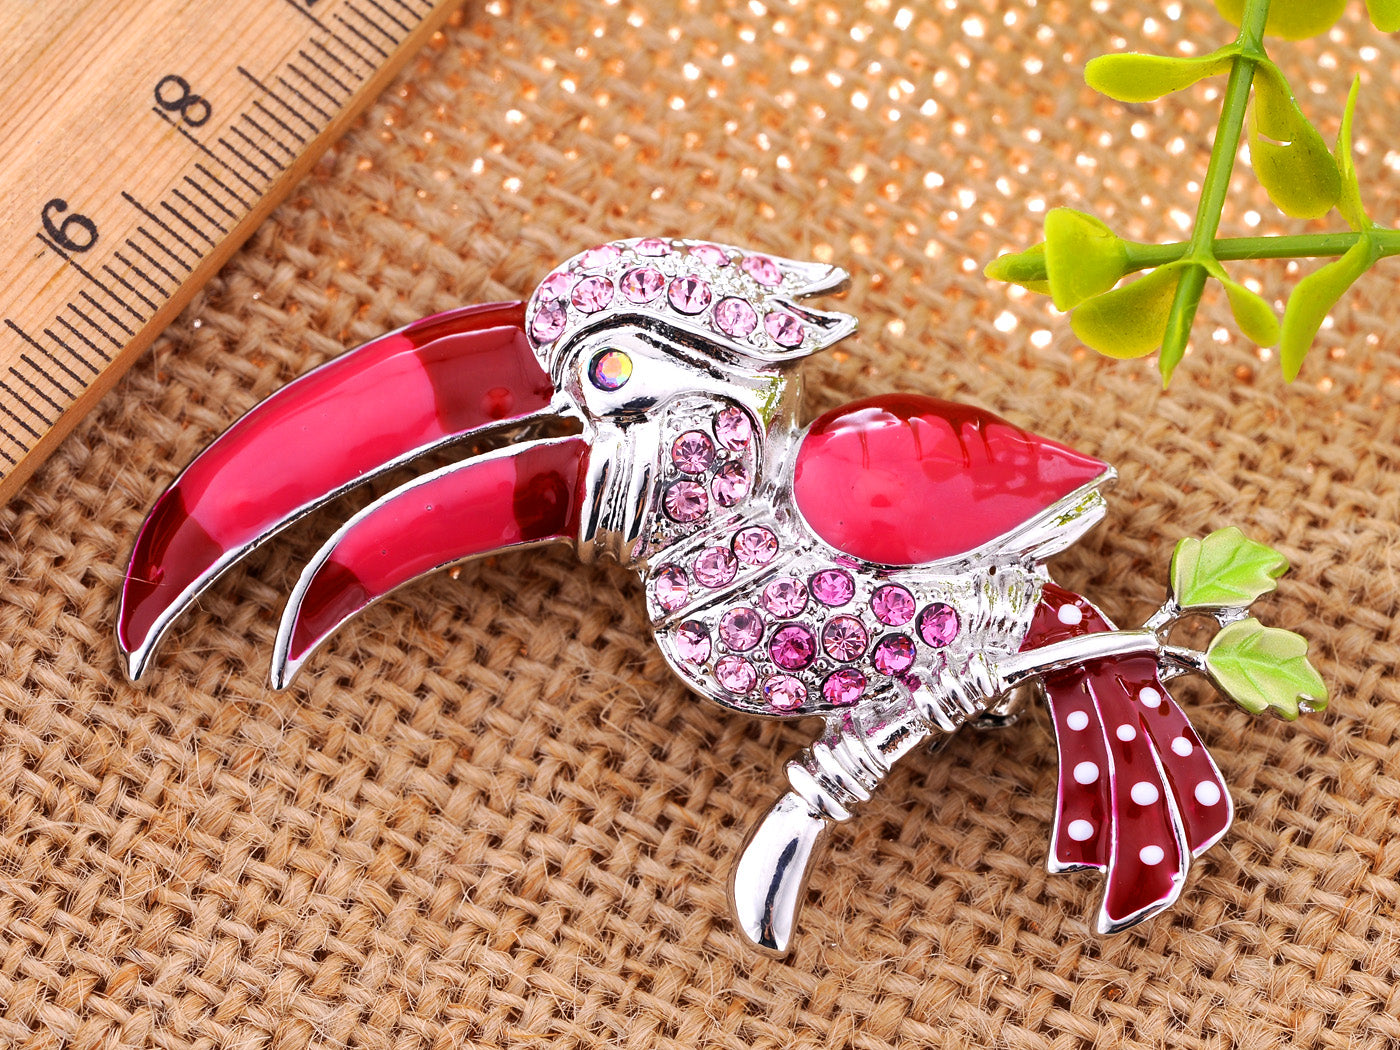 Rose Pink Hornbill Bird Tropical Pin Jewelry Brooch